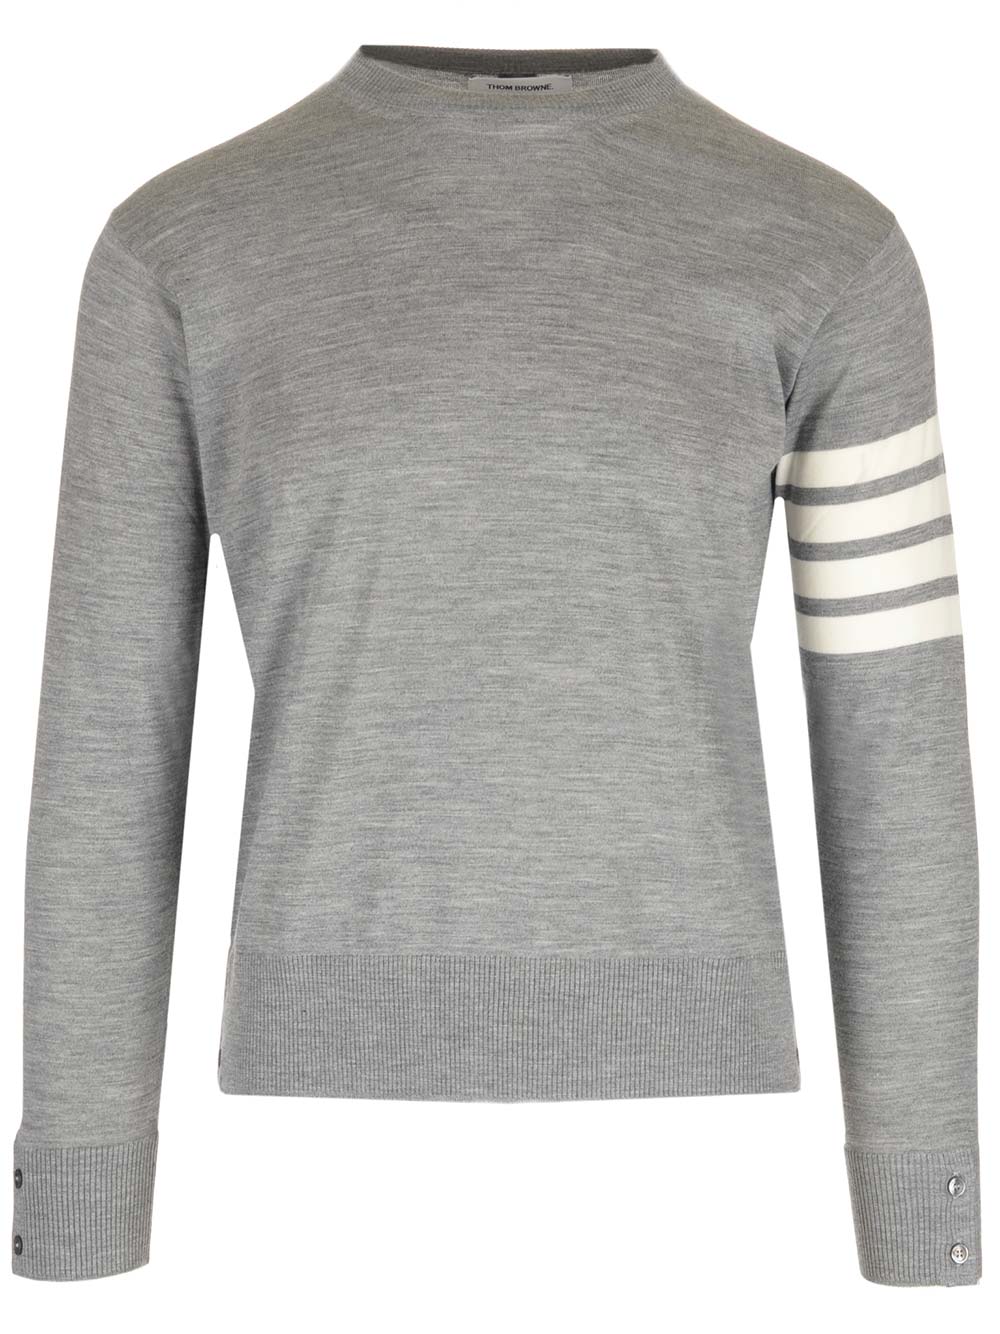 Shop Thom Browne Grey Merino Wool Sweater